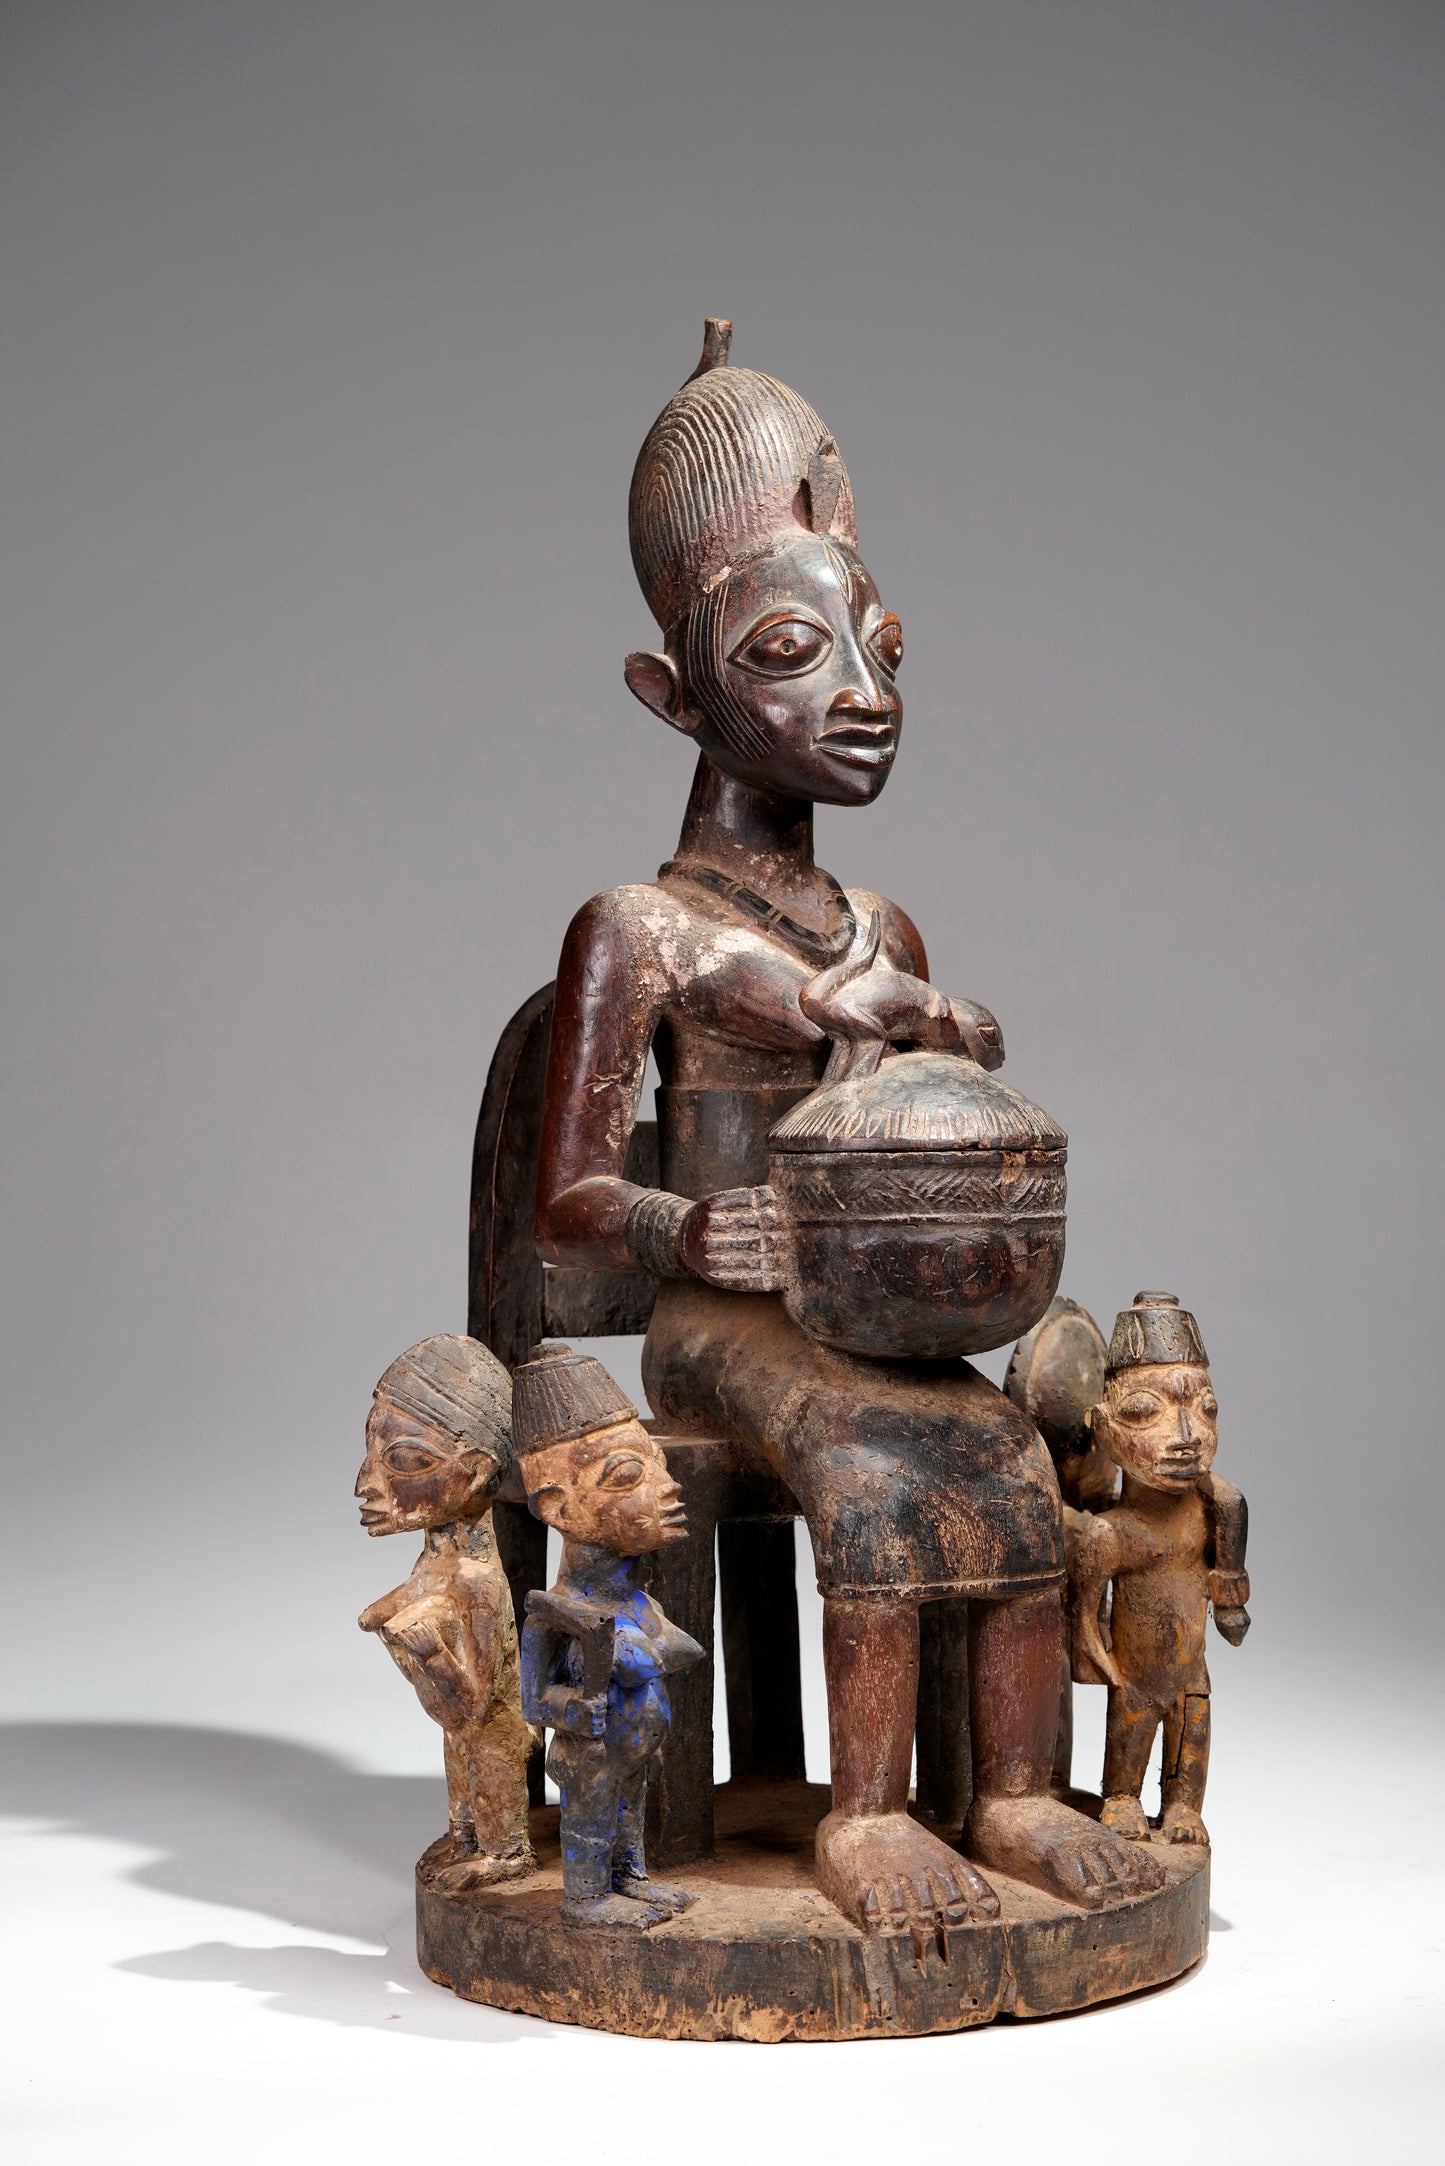 A Yoruba bowlkeeper